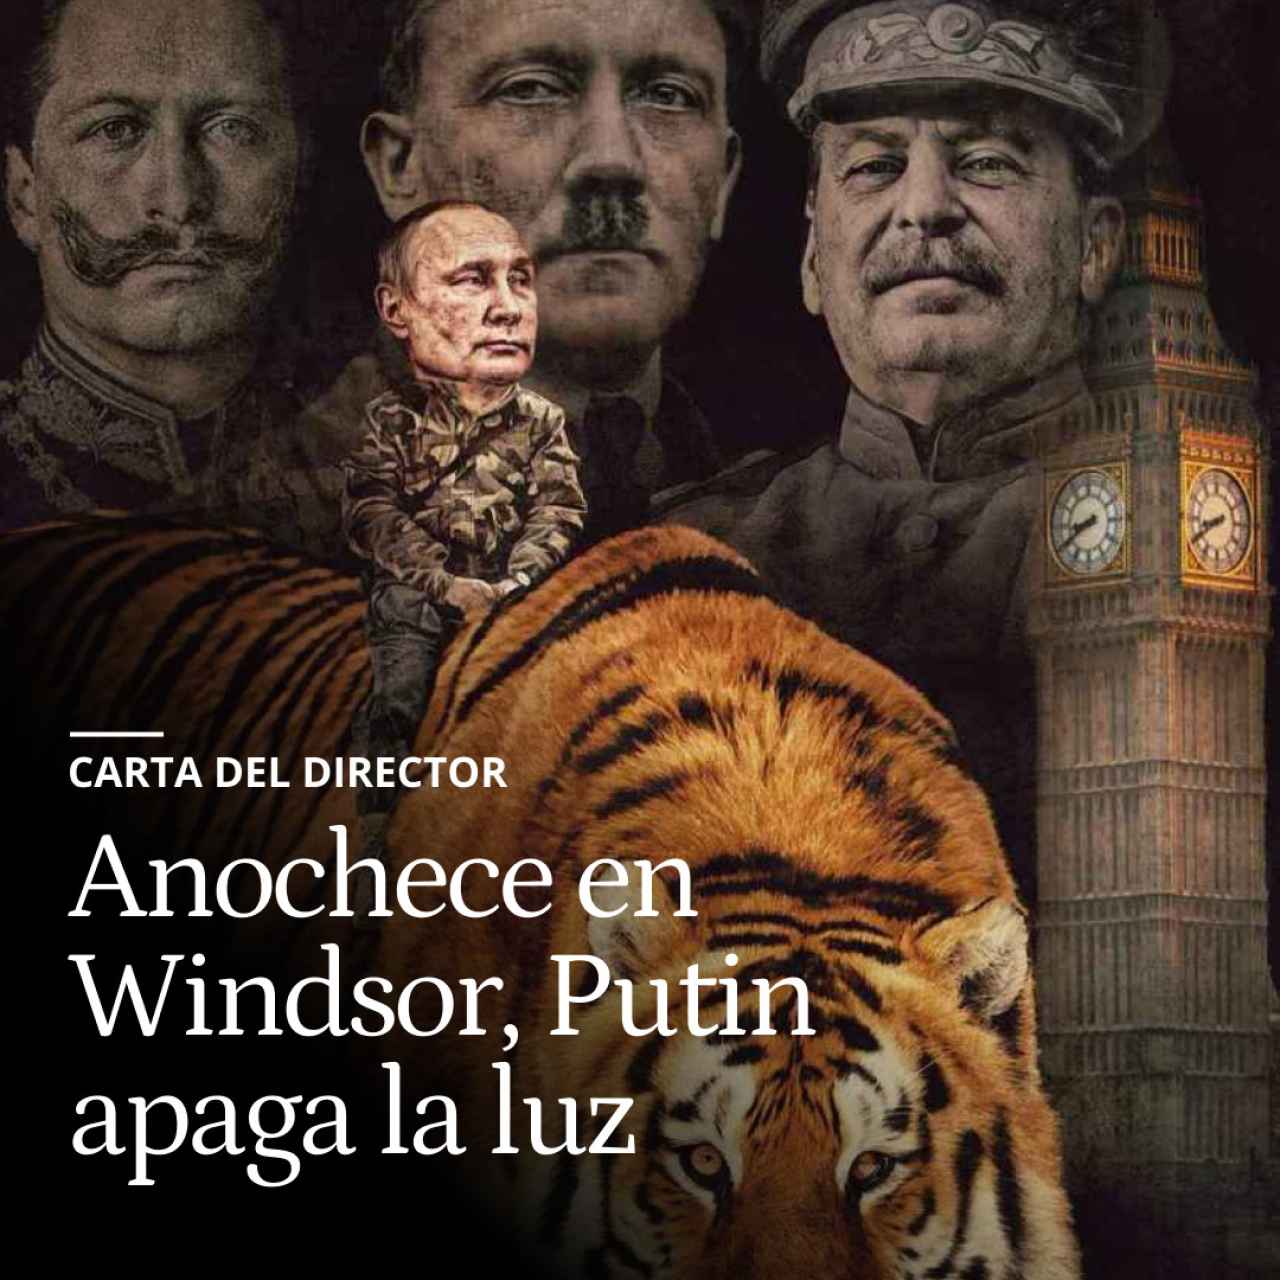 Anochece en Windsor, Putin apaga la luz